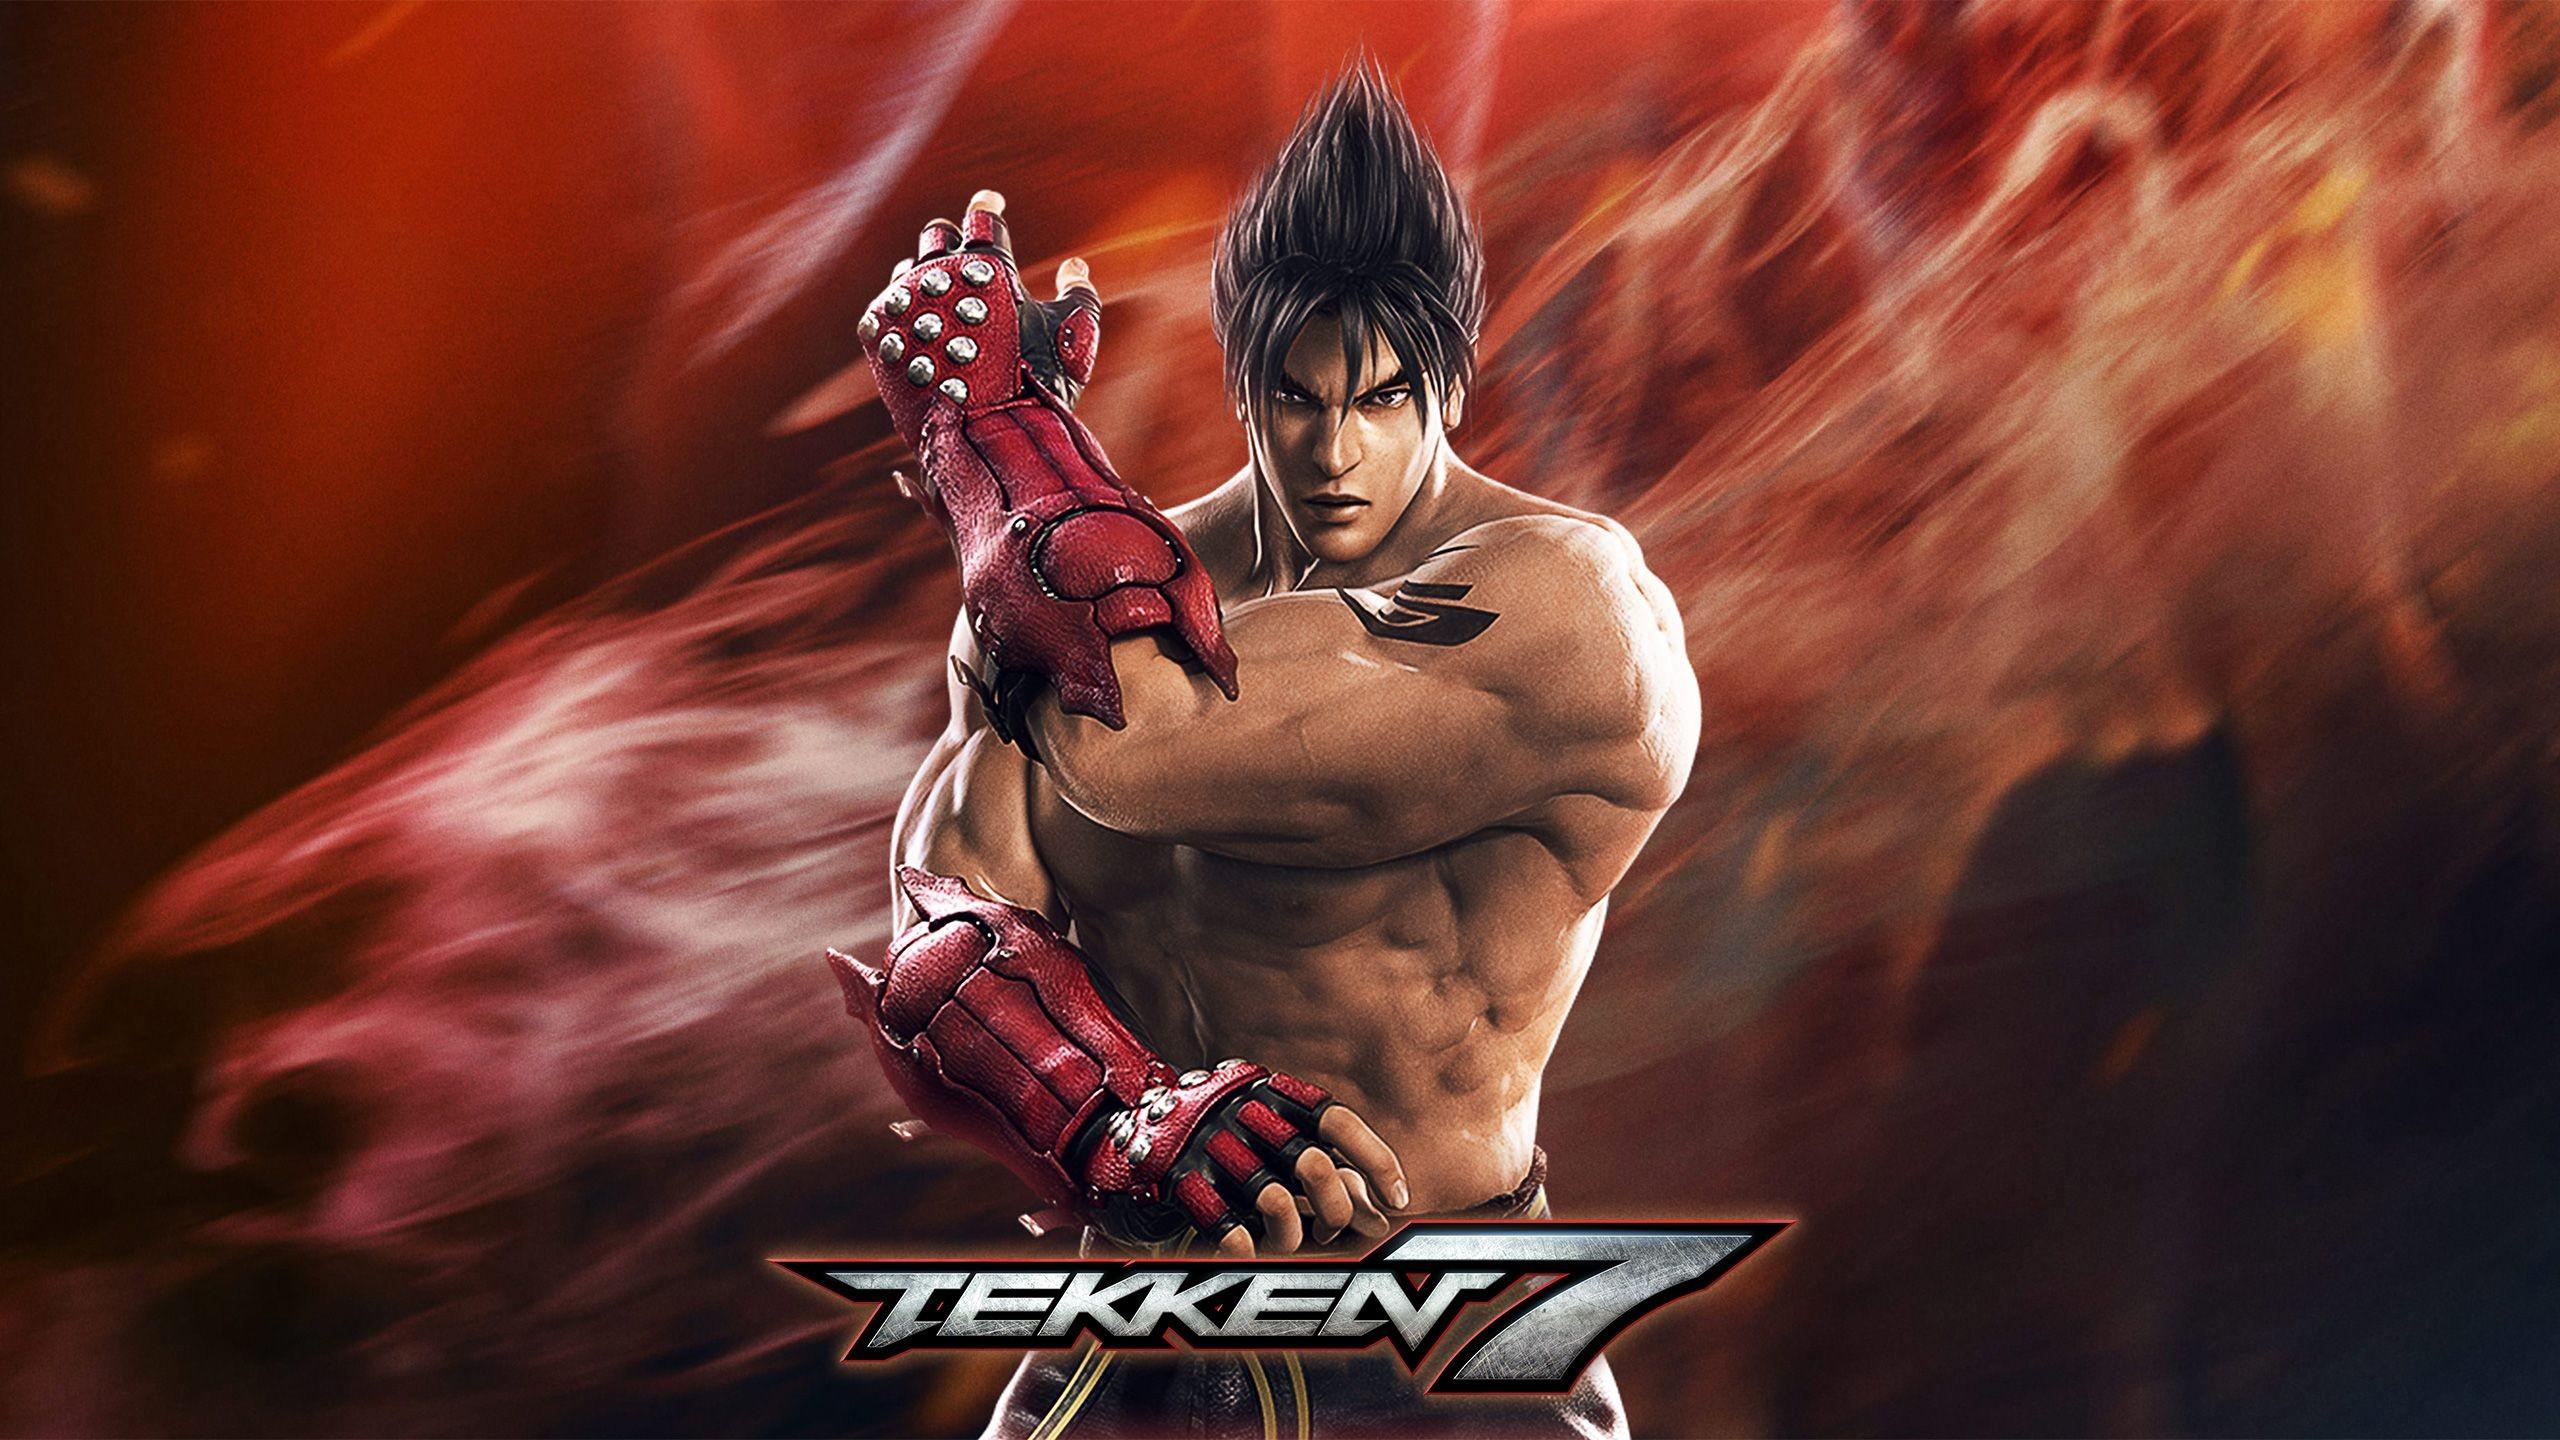 jin tekken 3 game download